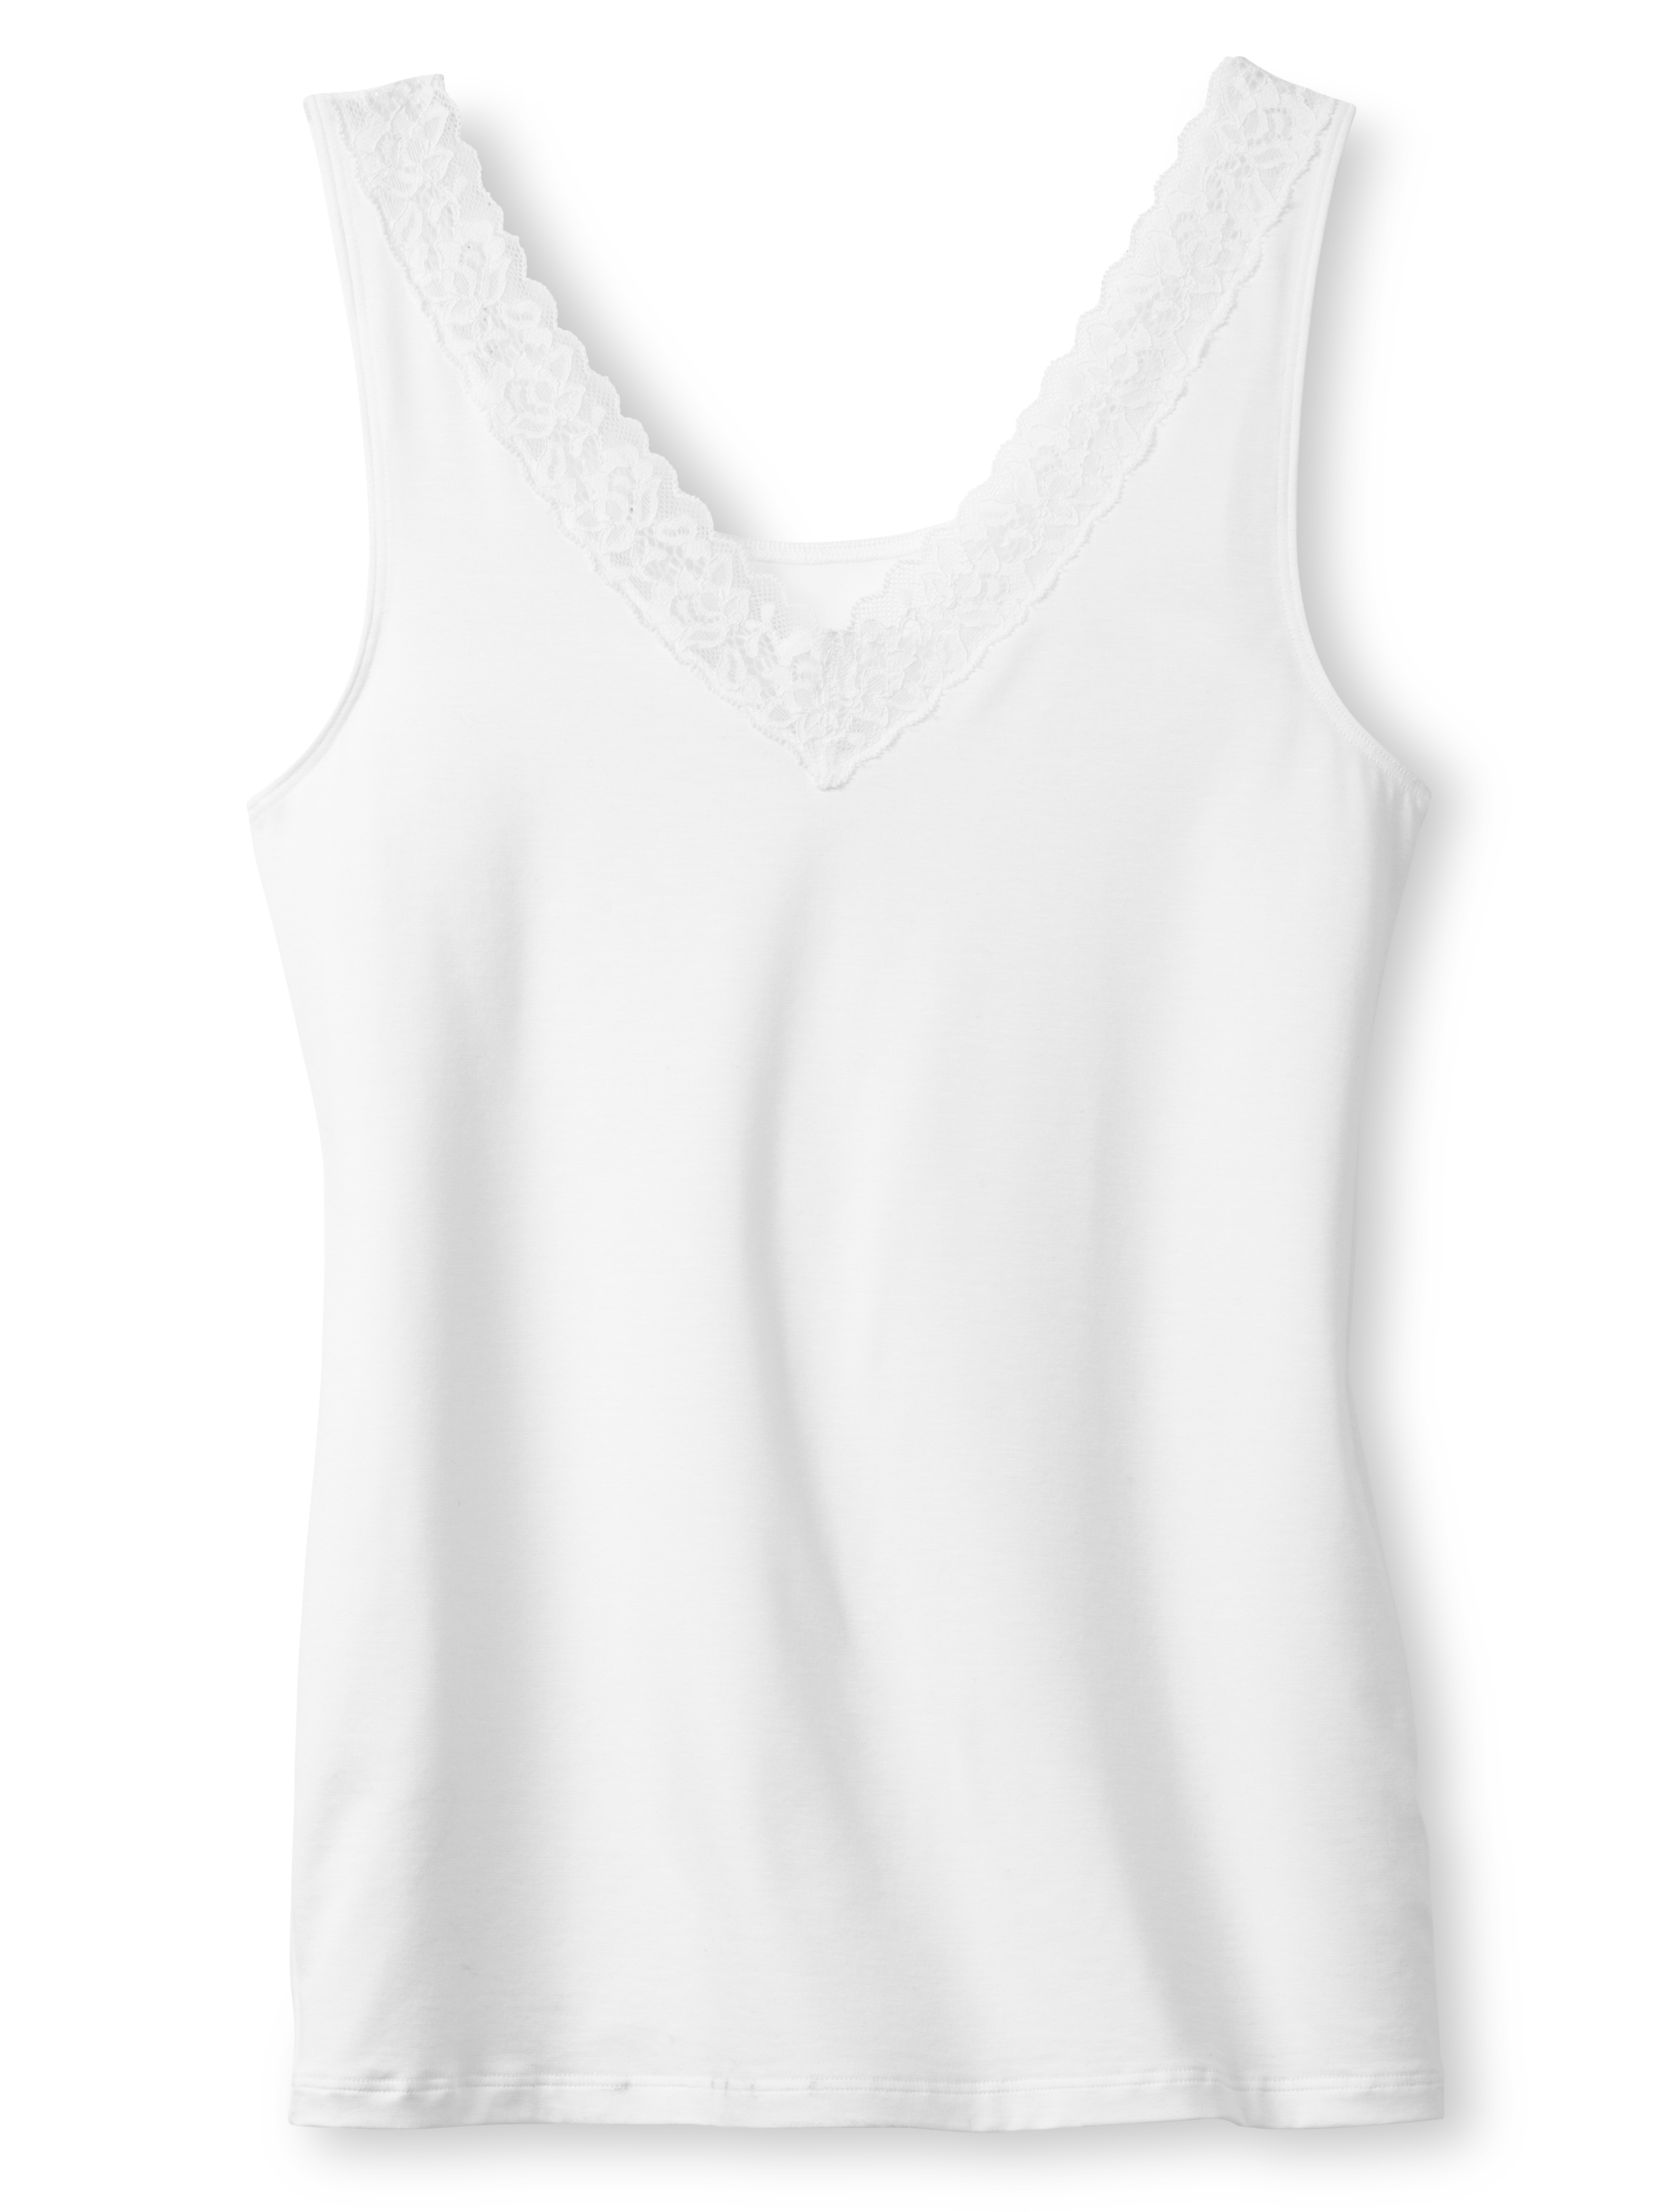 CALIDA Unterhemd »Natural Comfort Lace«, Tank-Top, Baumwoll-Top mit schöner Spitze